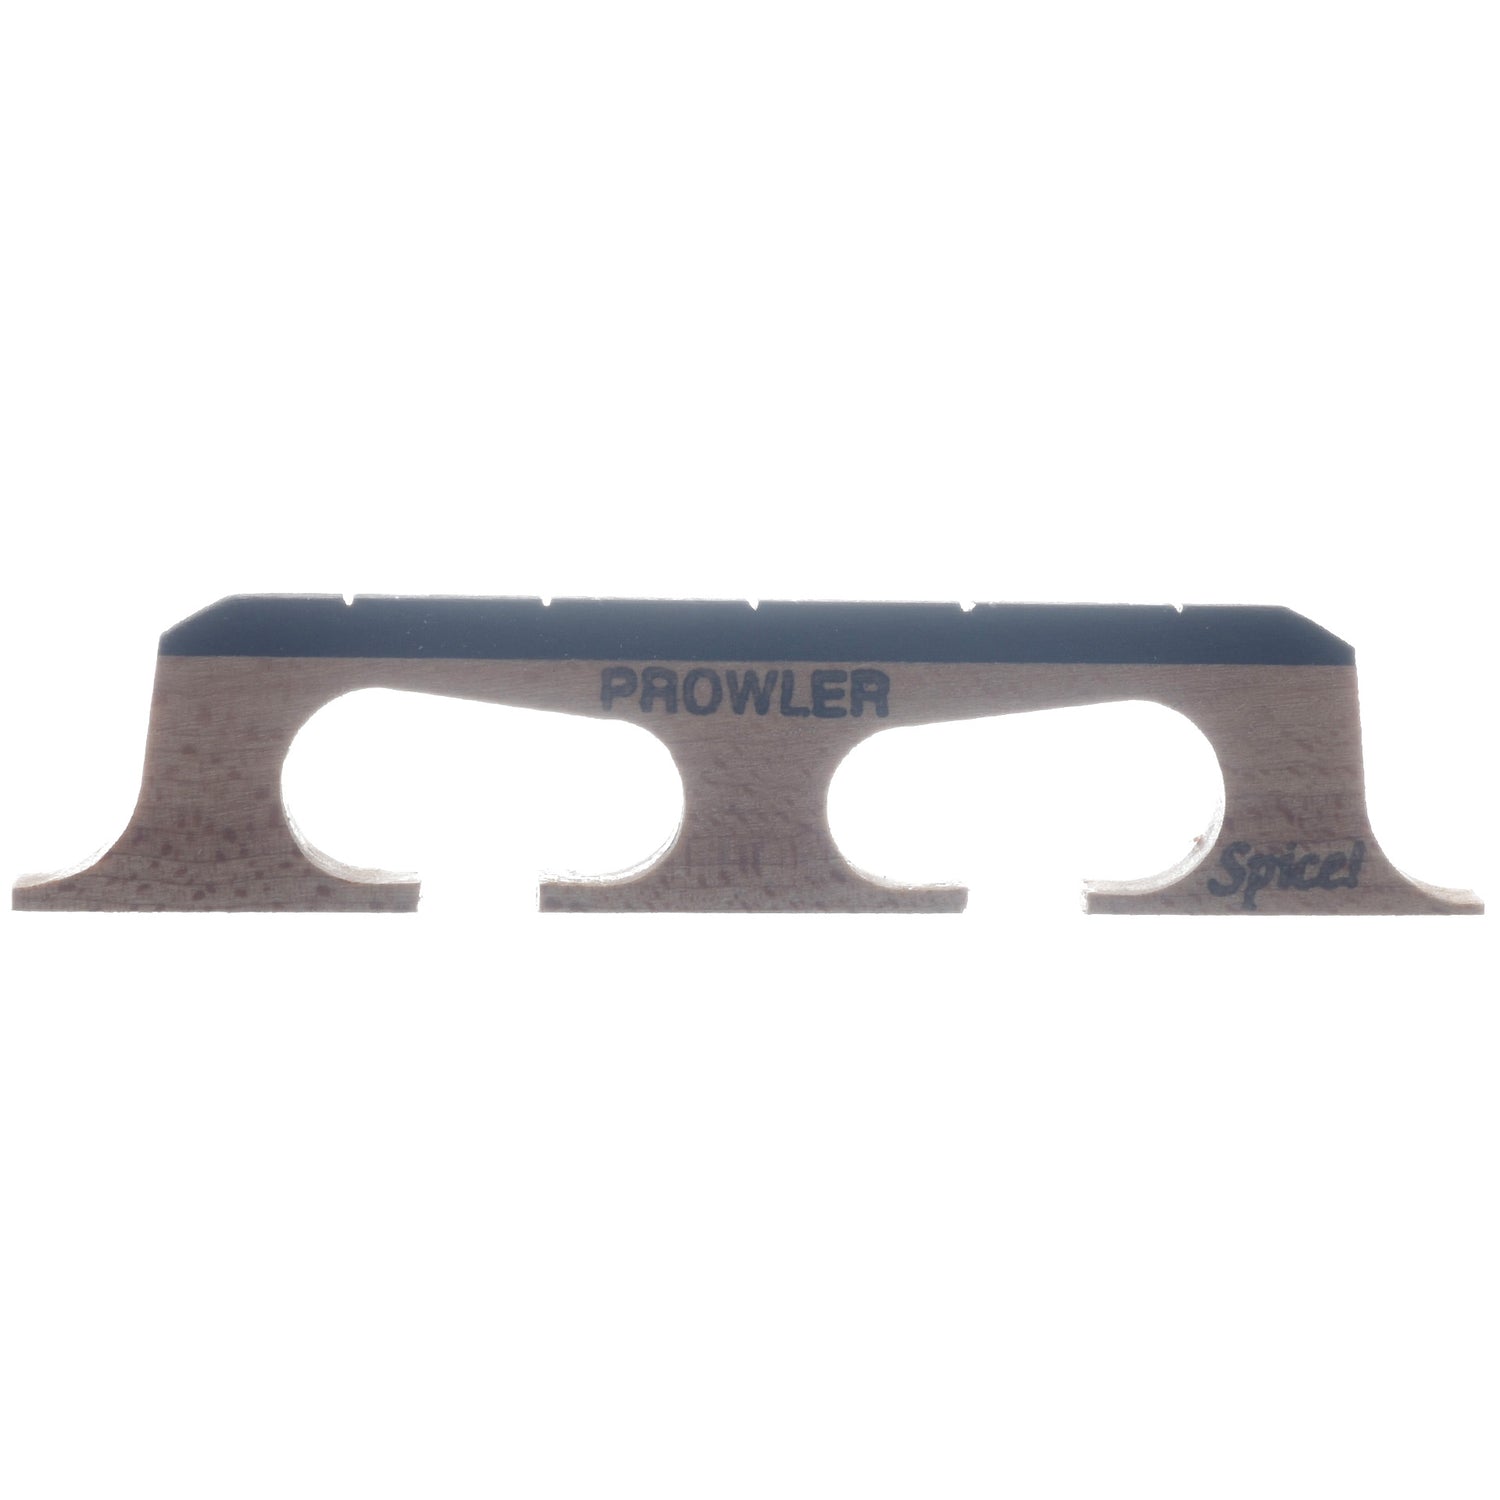 Image 2 of Kat Eyz Prowler Spice Banjo Bridge, 5/8" High, Standard Spacing - SKU# KEPB-5/8-S : Product Type Accessories & Parts : Elderly Instruments